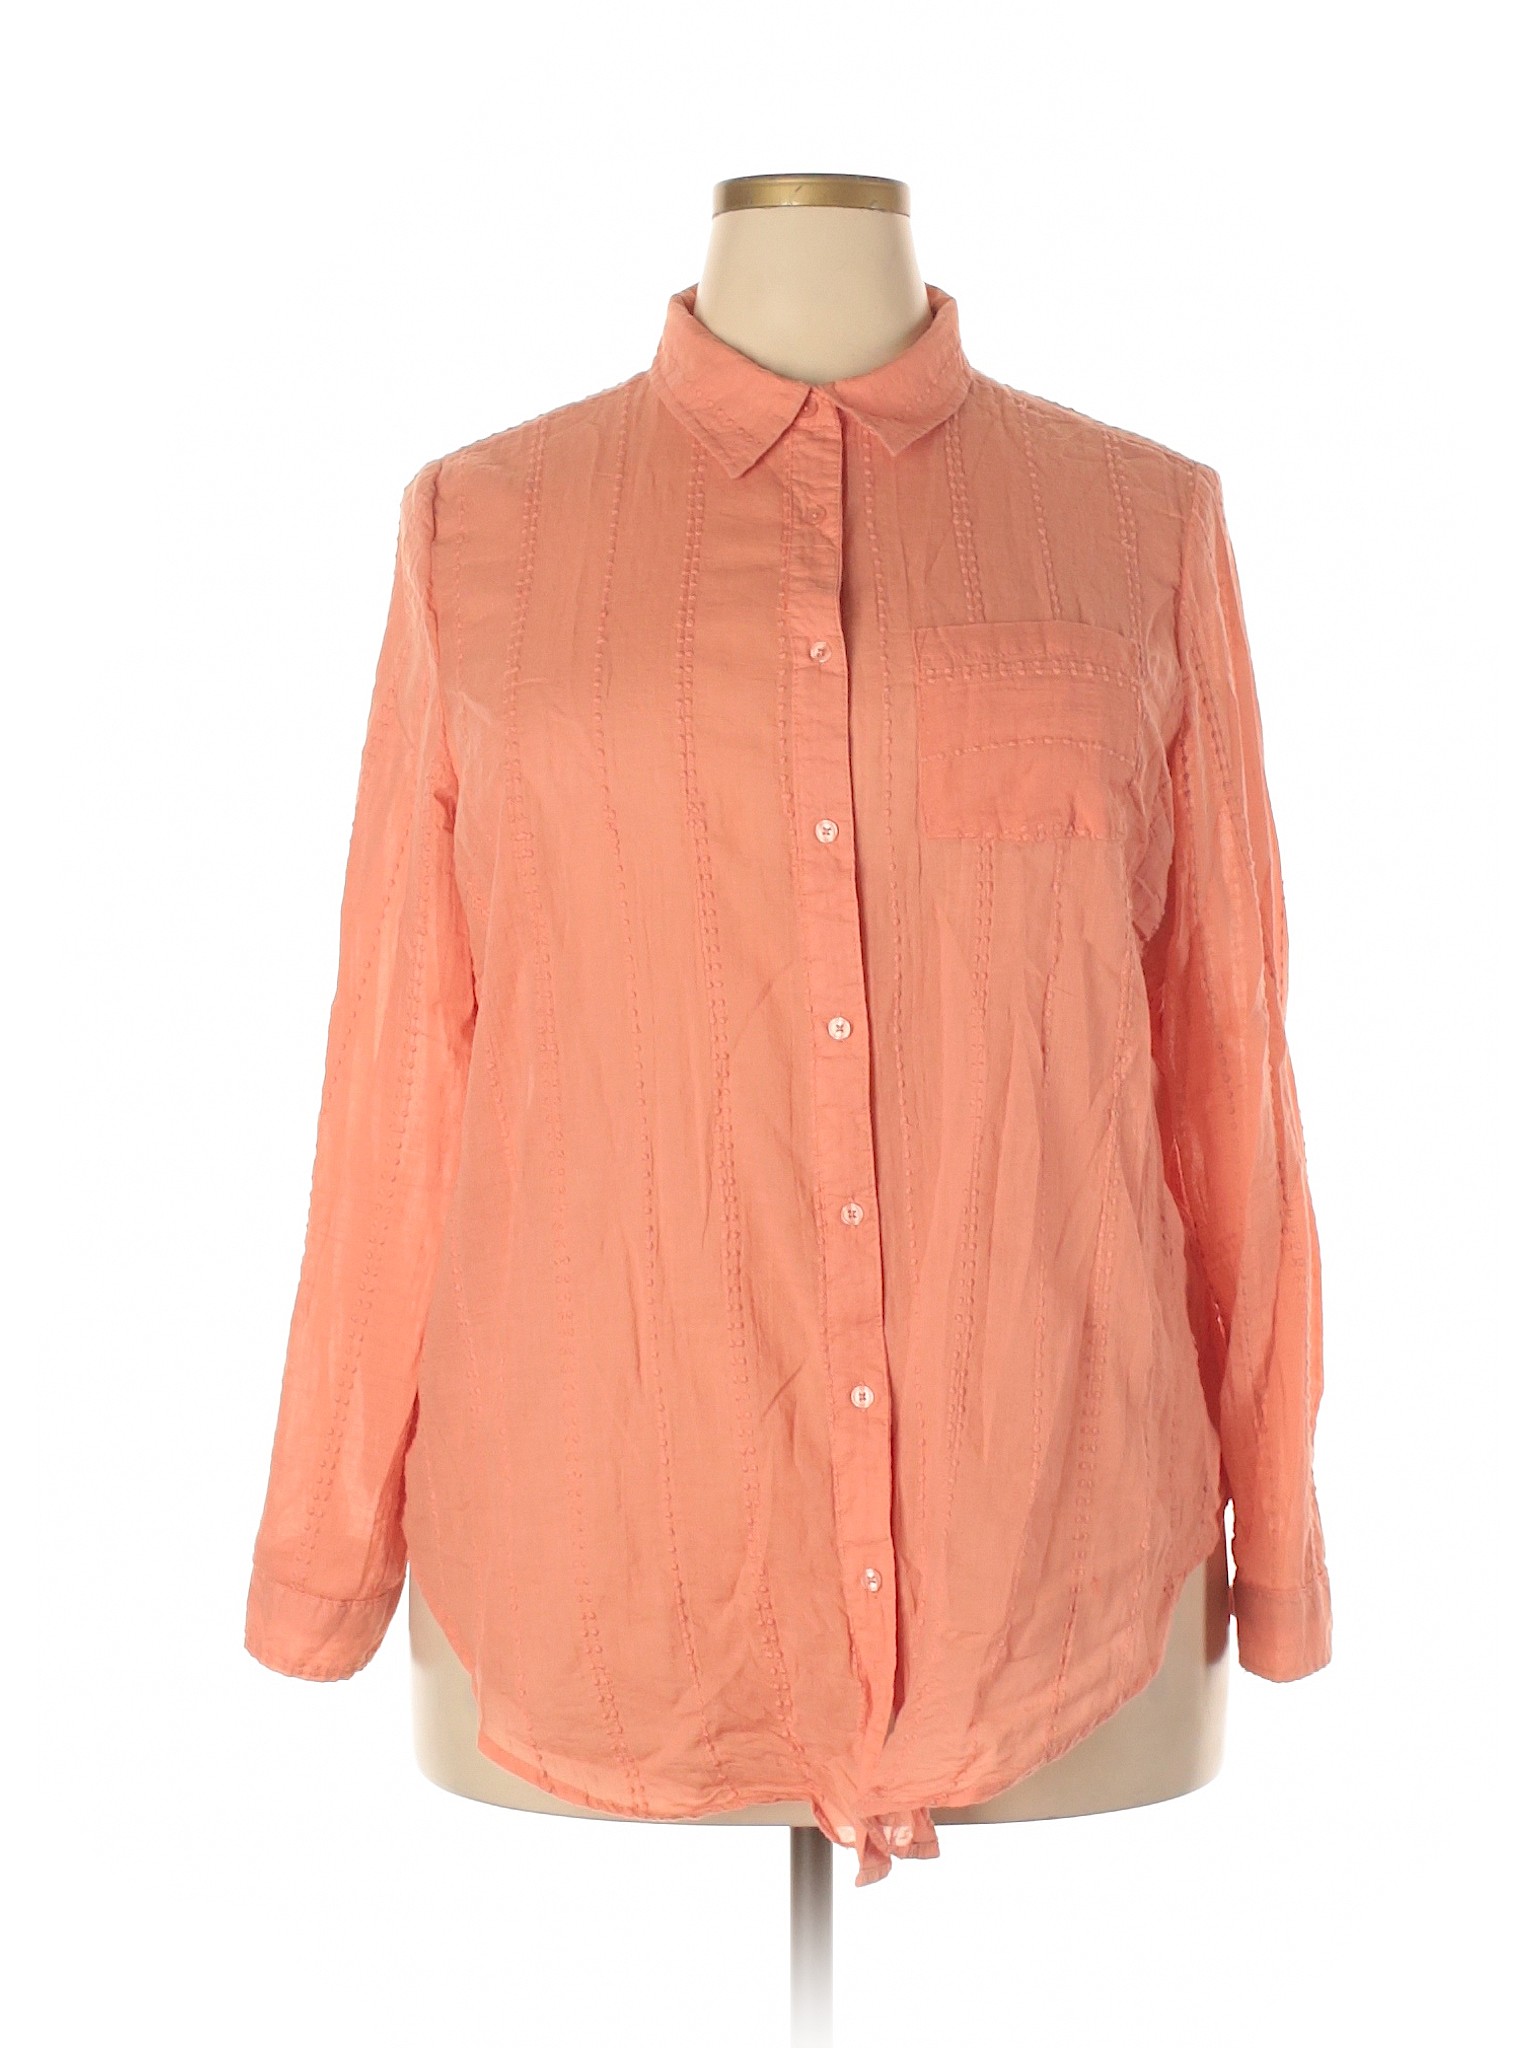 Westport Women Orange Long Sleeve Button-Down Shirt 1X Plus | eBay